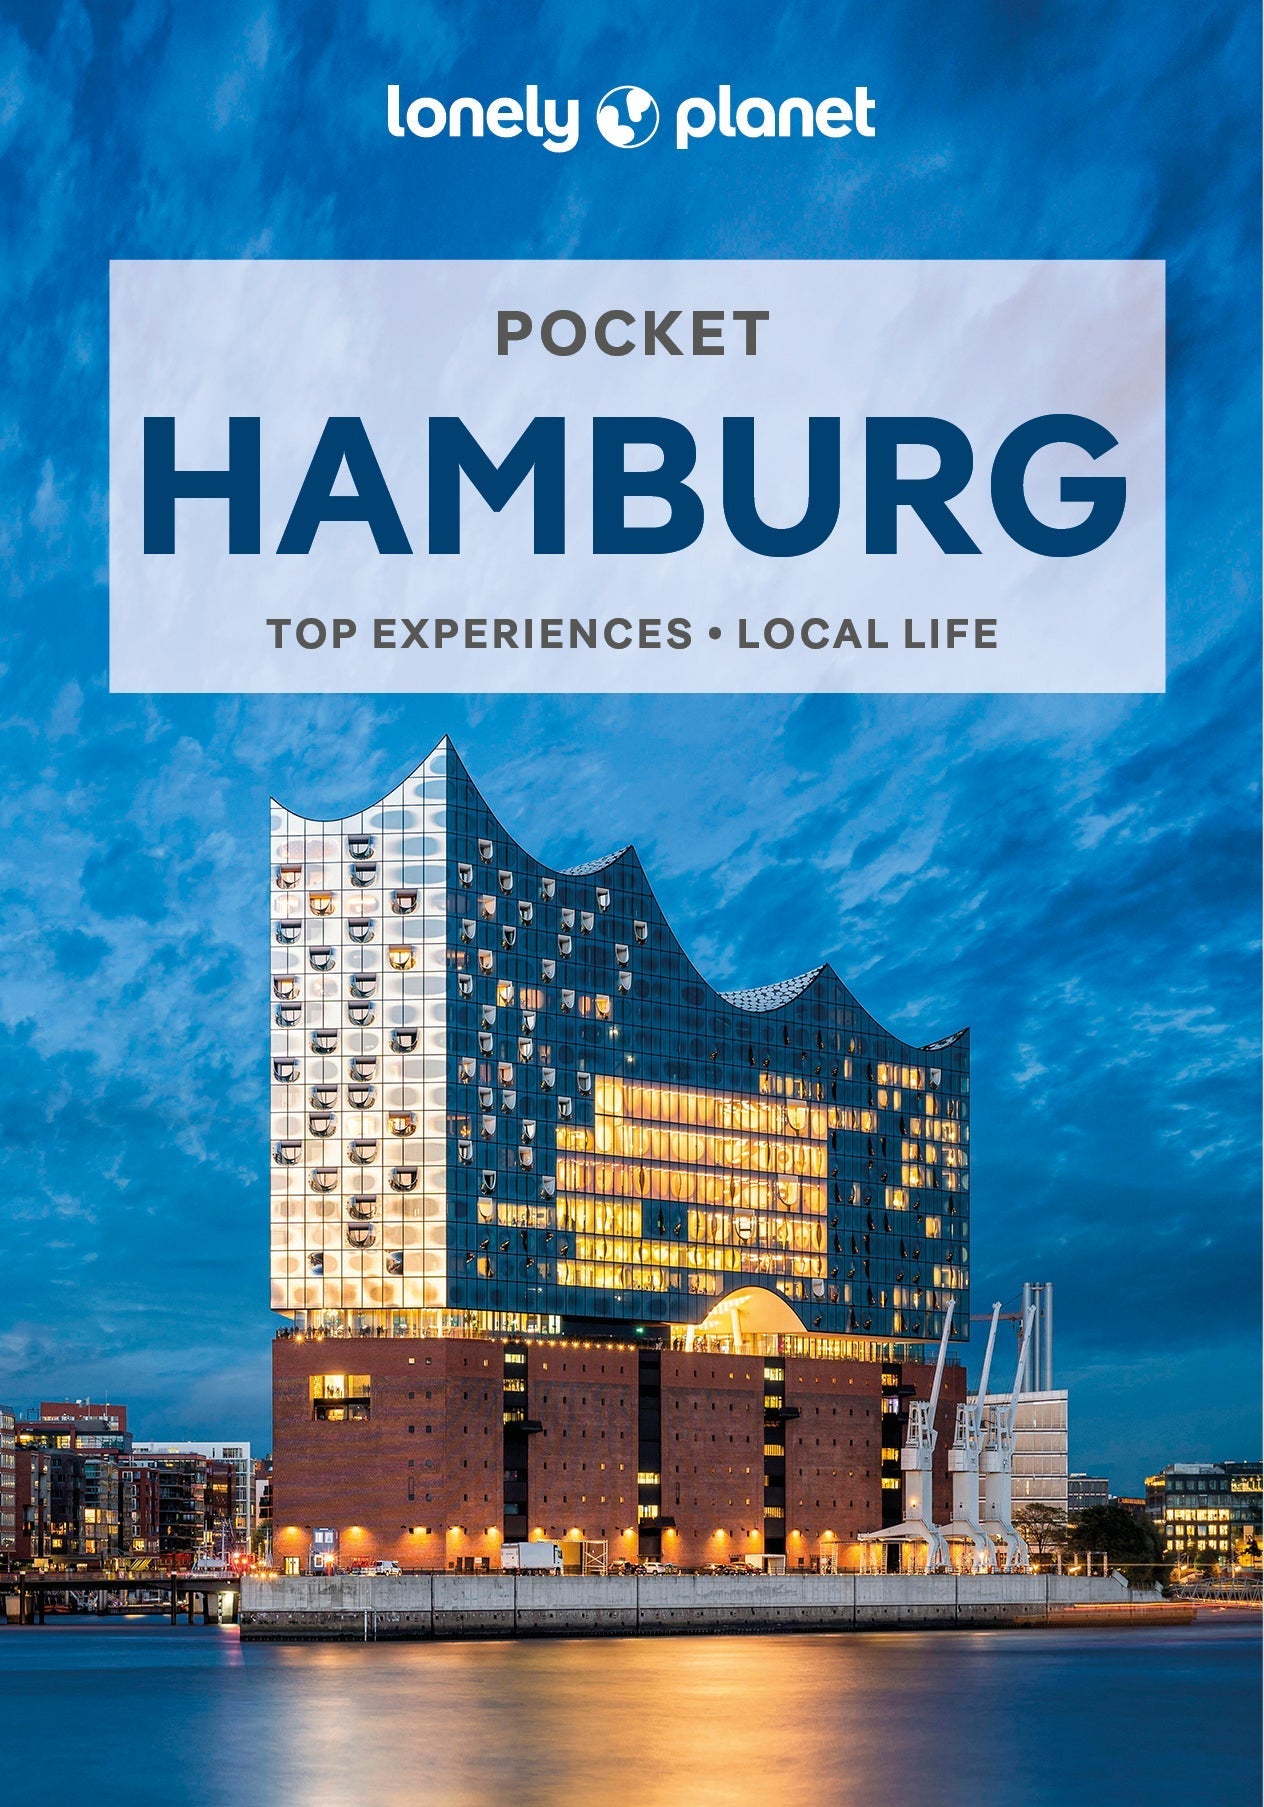 Pocket　Book　Hamburg　Travel　and　Ebook